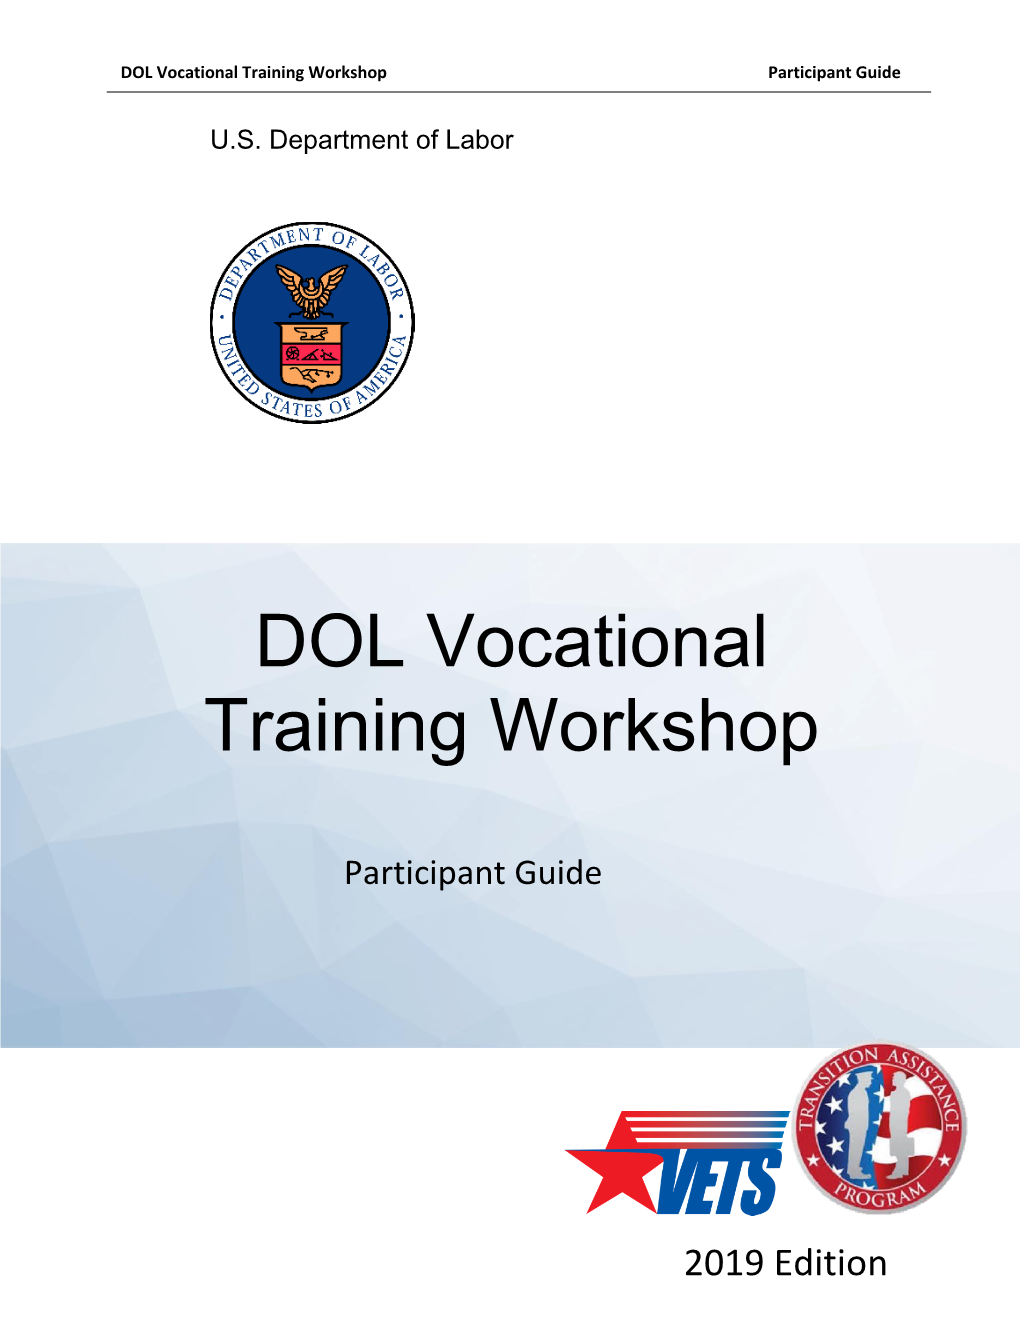 DOL Vocational Training Workshop Participant Guide